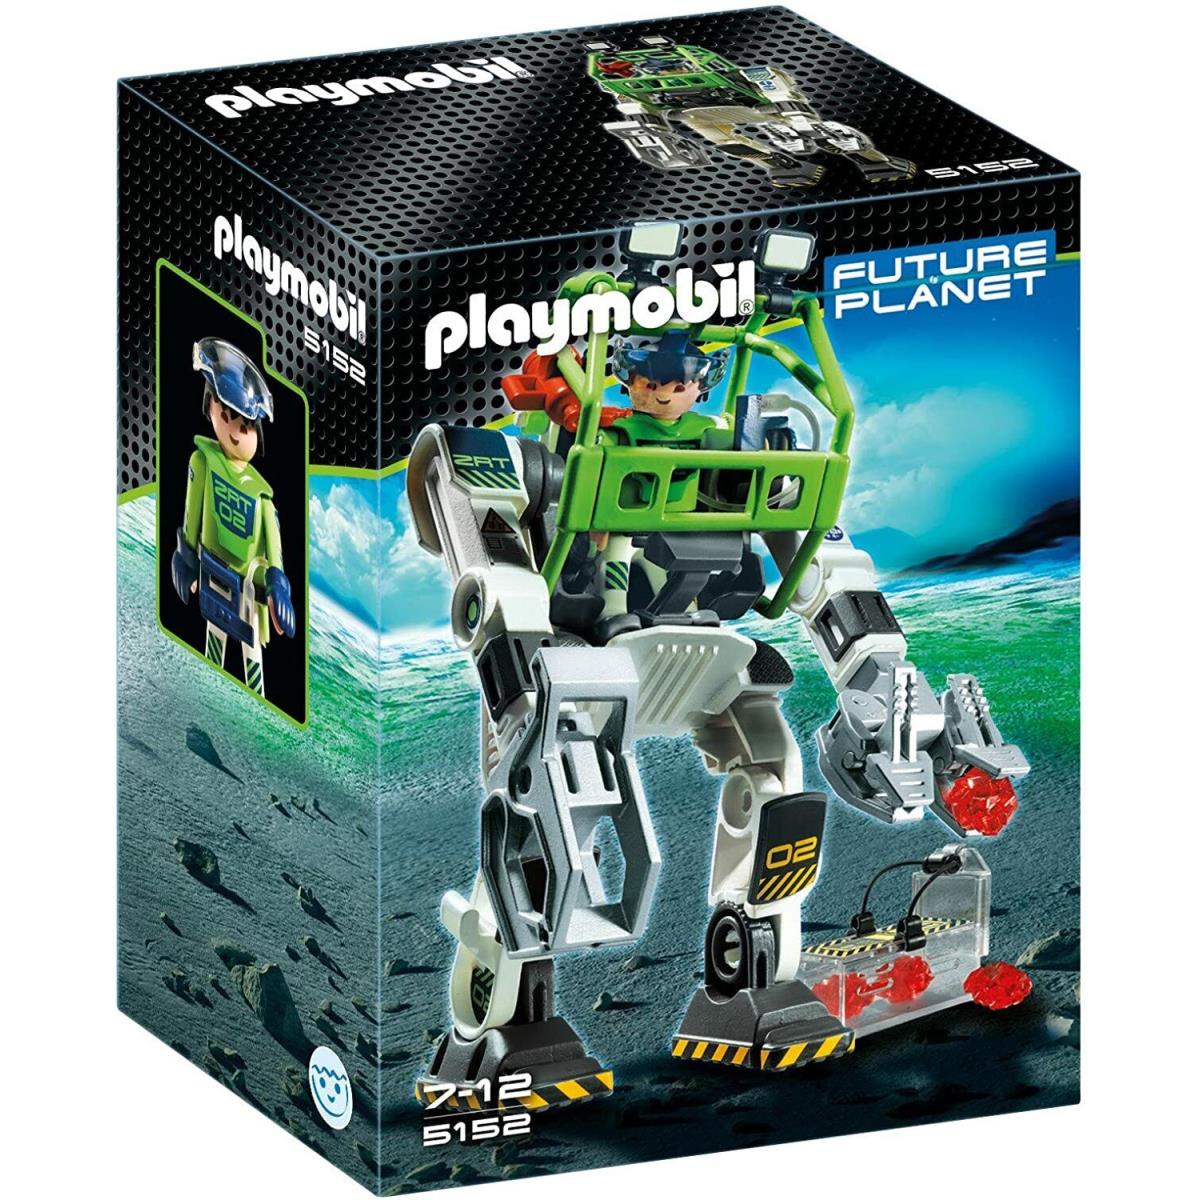 Playmobil 5152 Mech Future Planet E-rangers Collectobot Warrior Machine